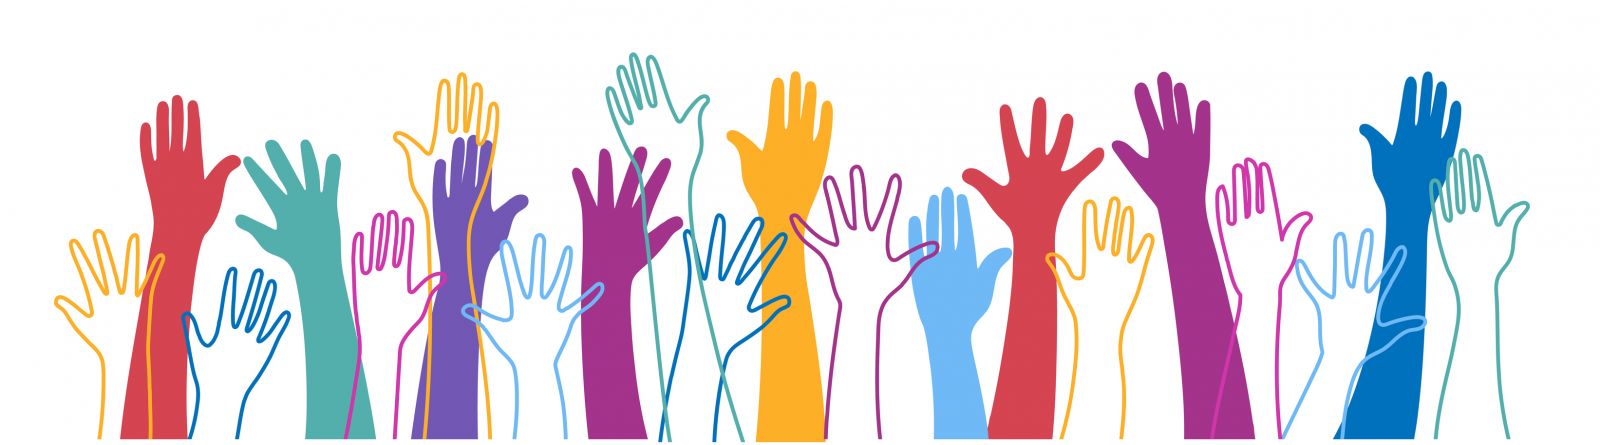 Coloured illustration of raised hands banner image